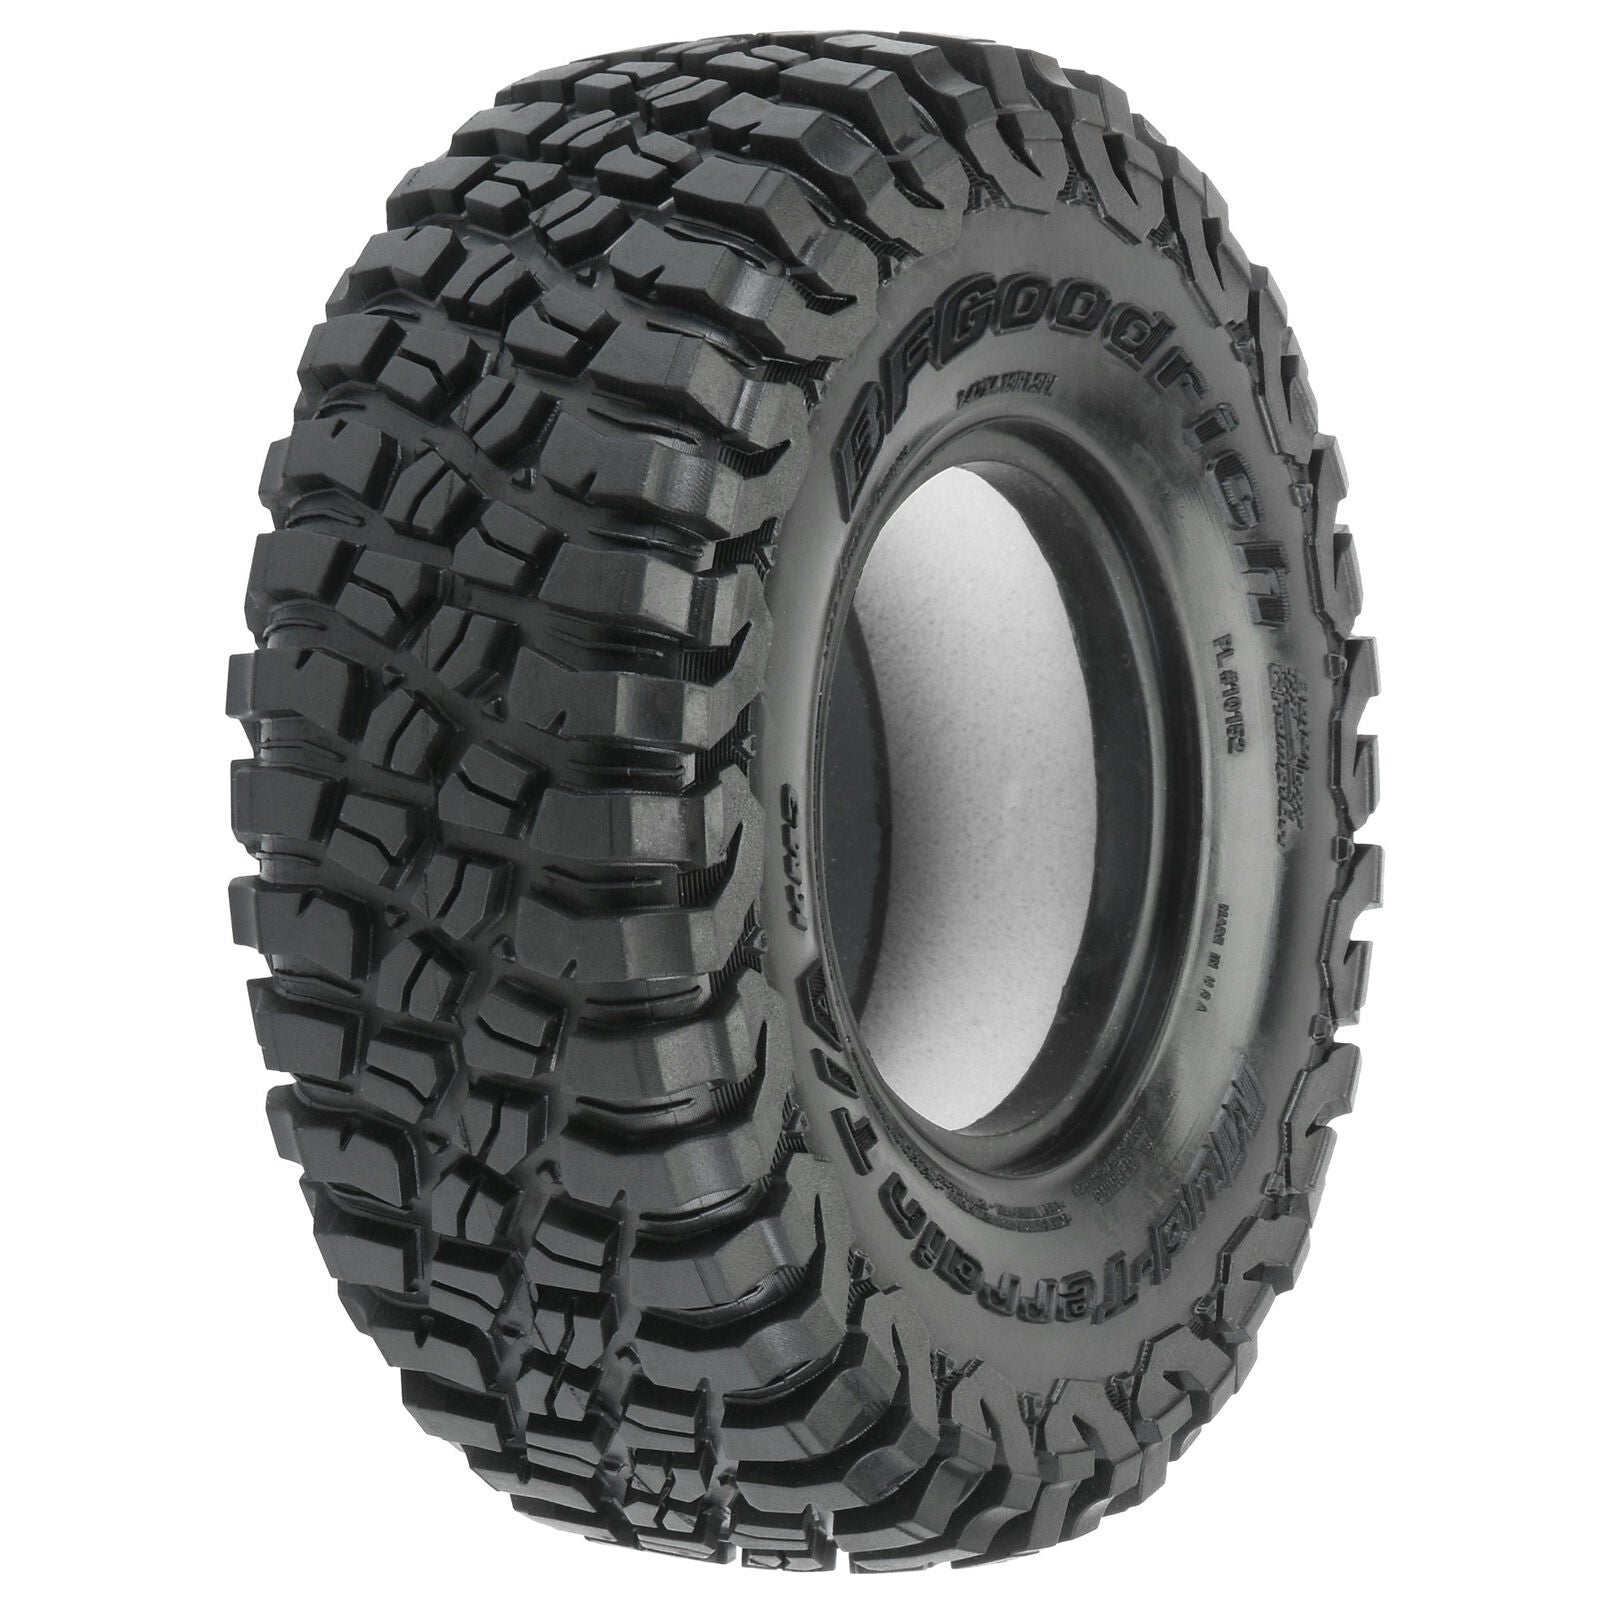 PROLINE 10152-14 BFGoodrich KM3 Mud-Terrain T/A Class 1 1.9" Rock Crawler Tires (2) G8